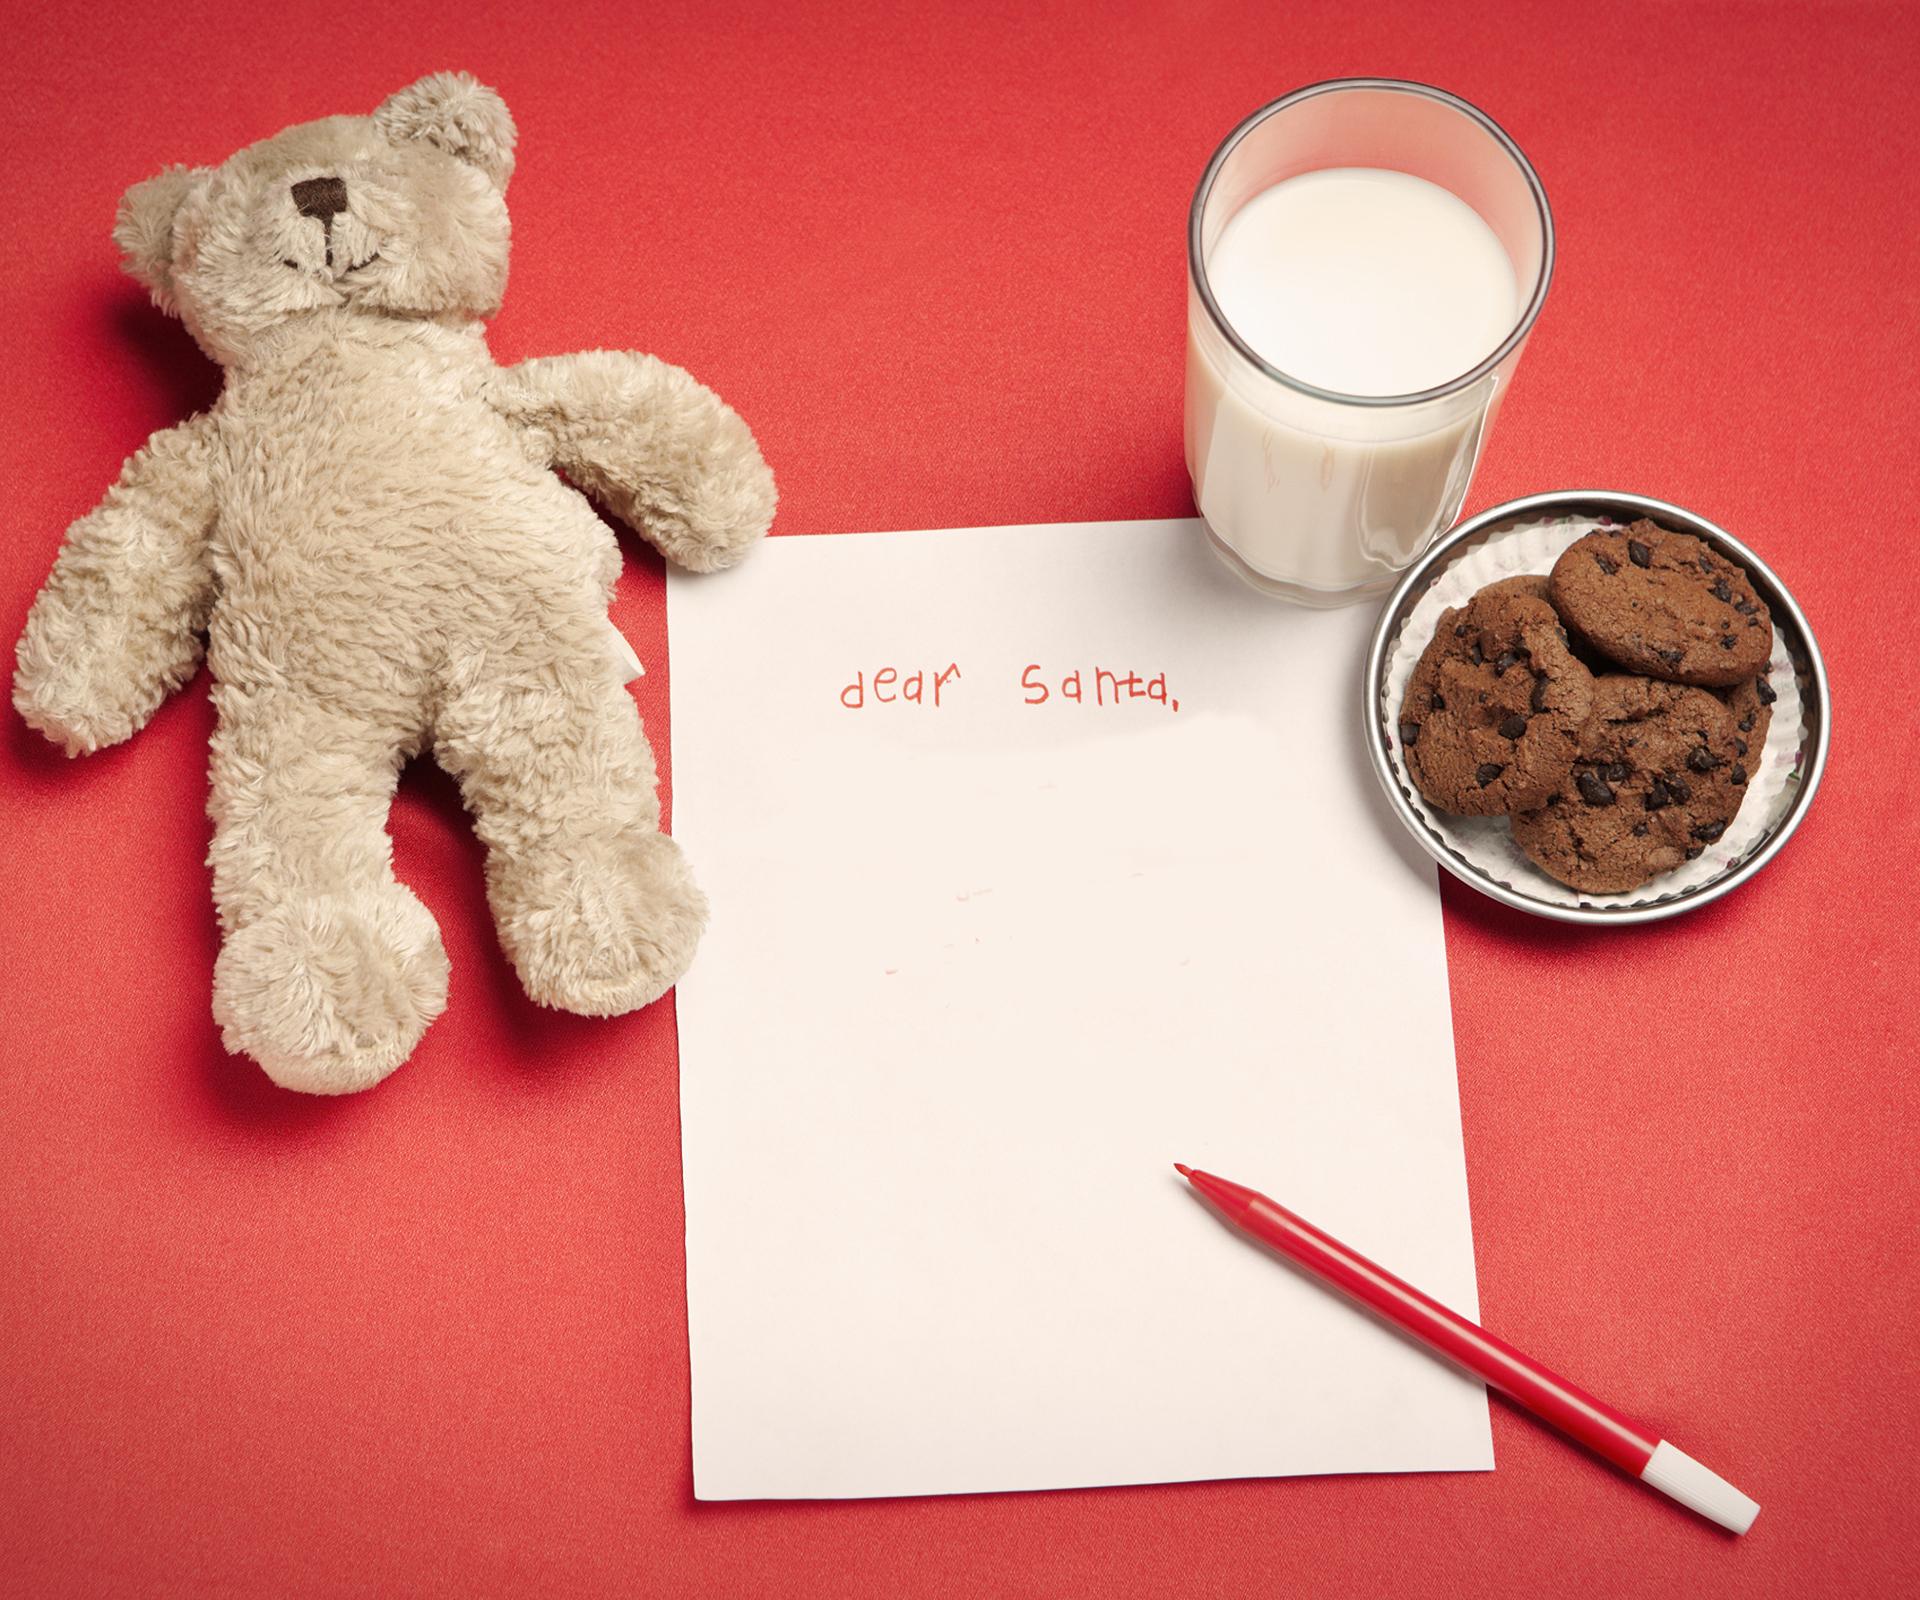 The 15 strangest Santa gift requests